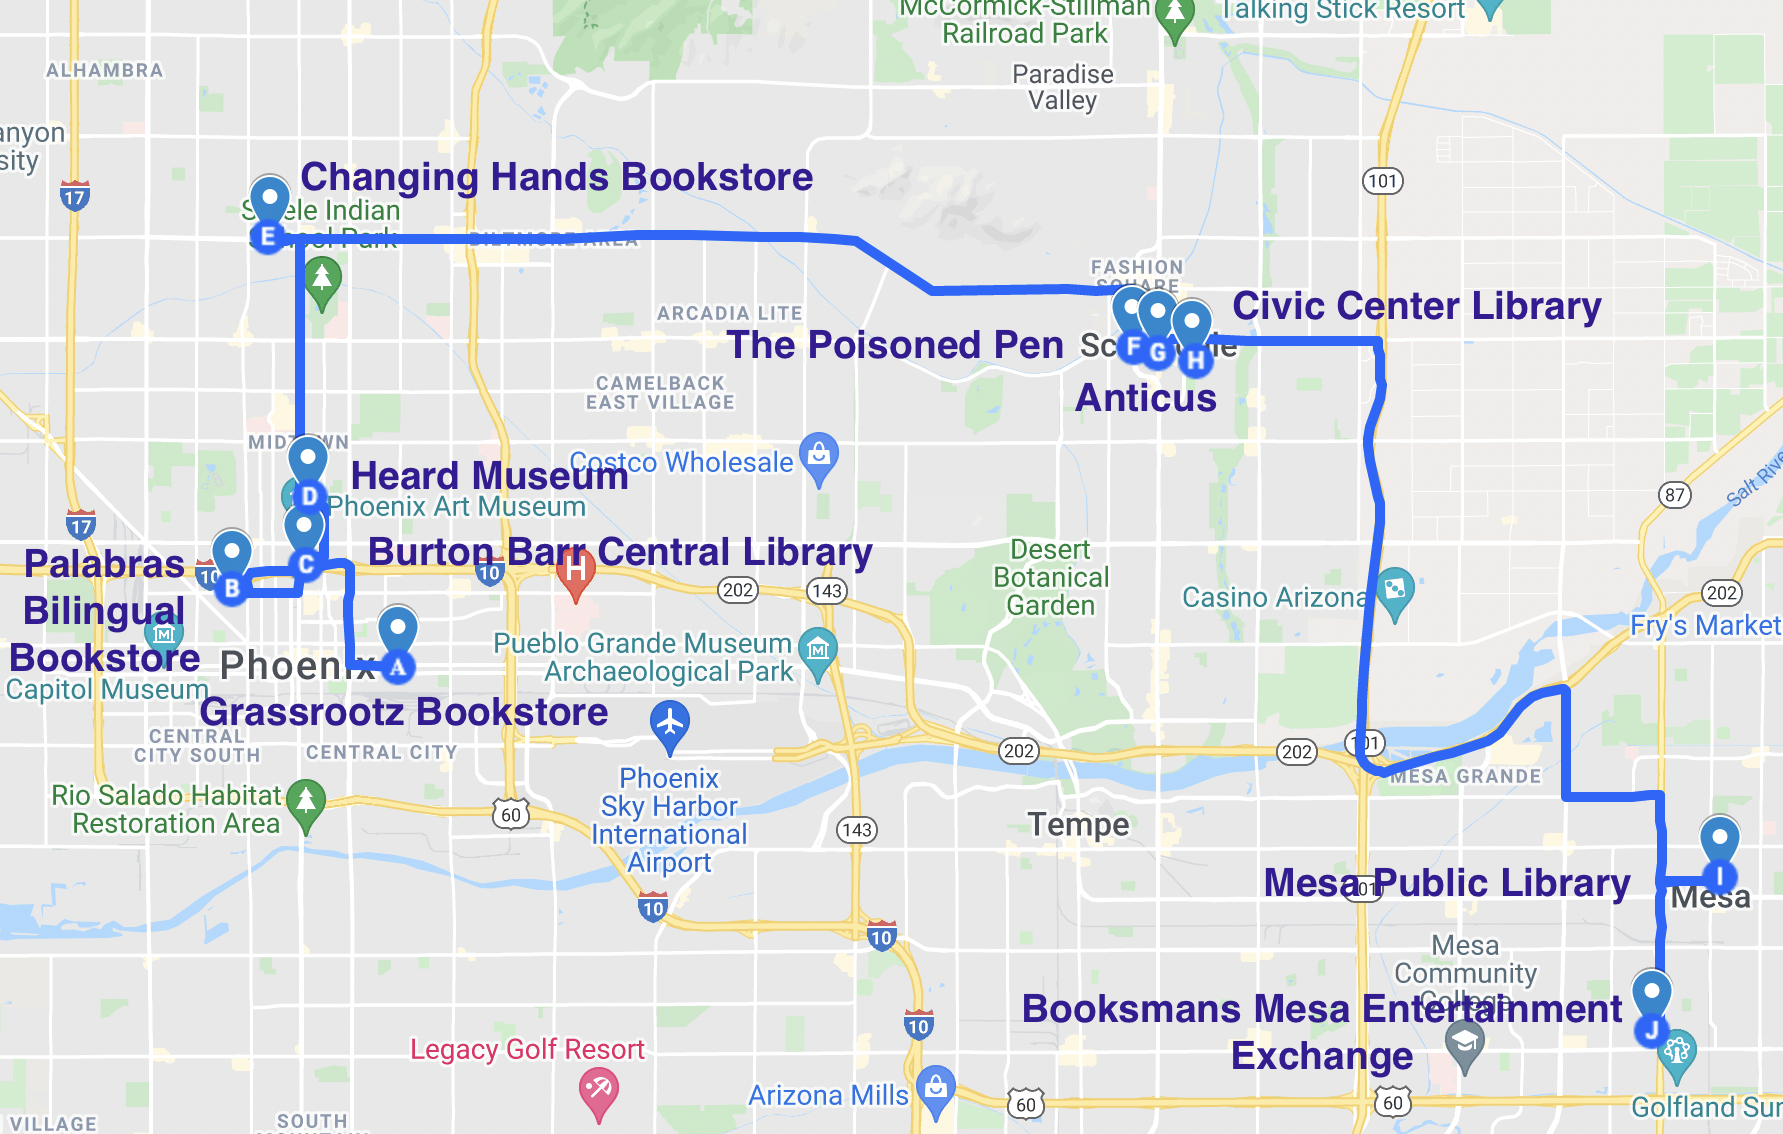 map of literary spots in phoenix, scottsdale, and mesa arizona